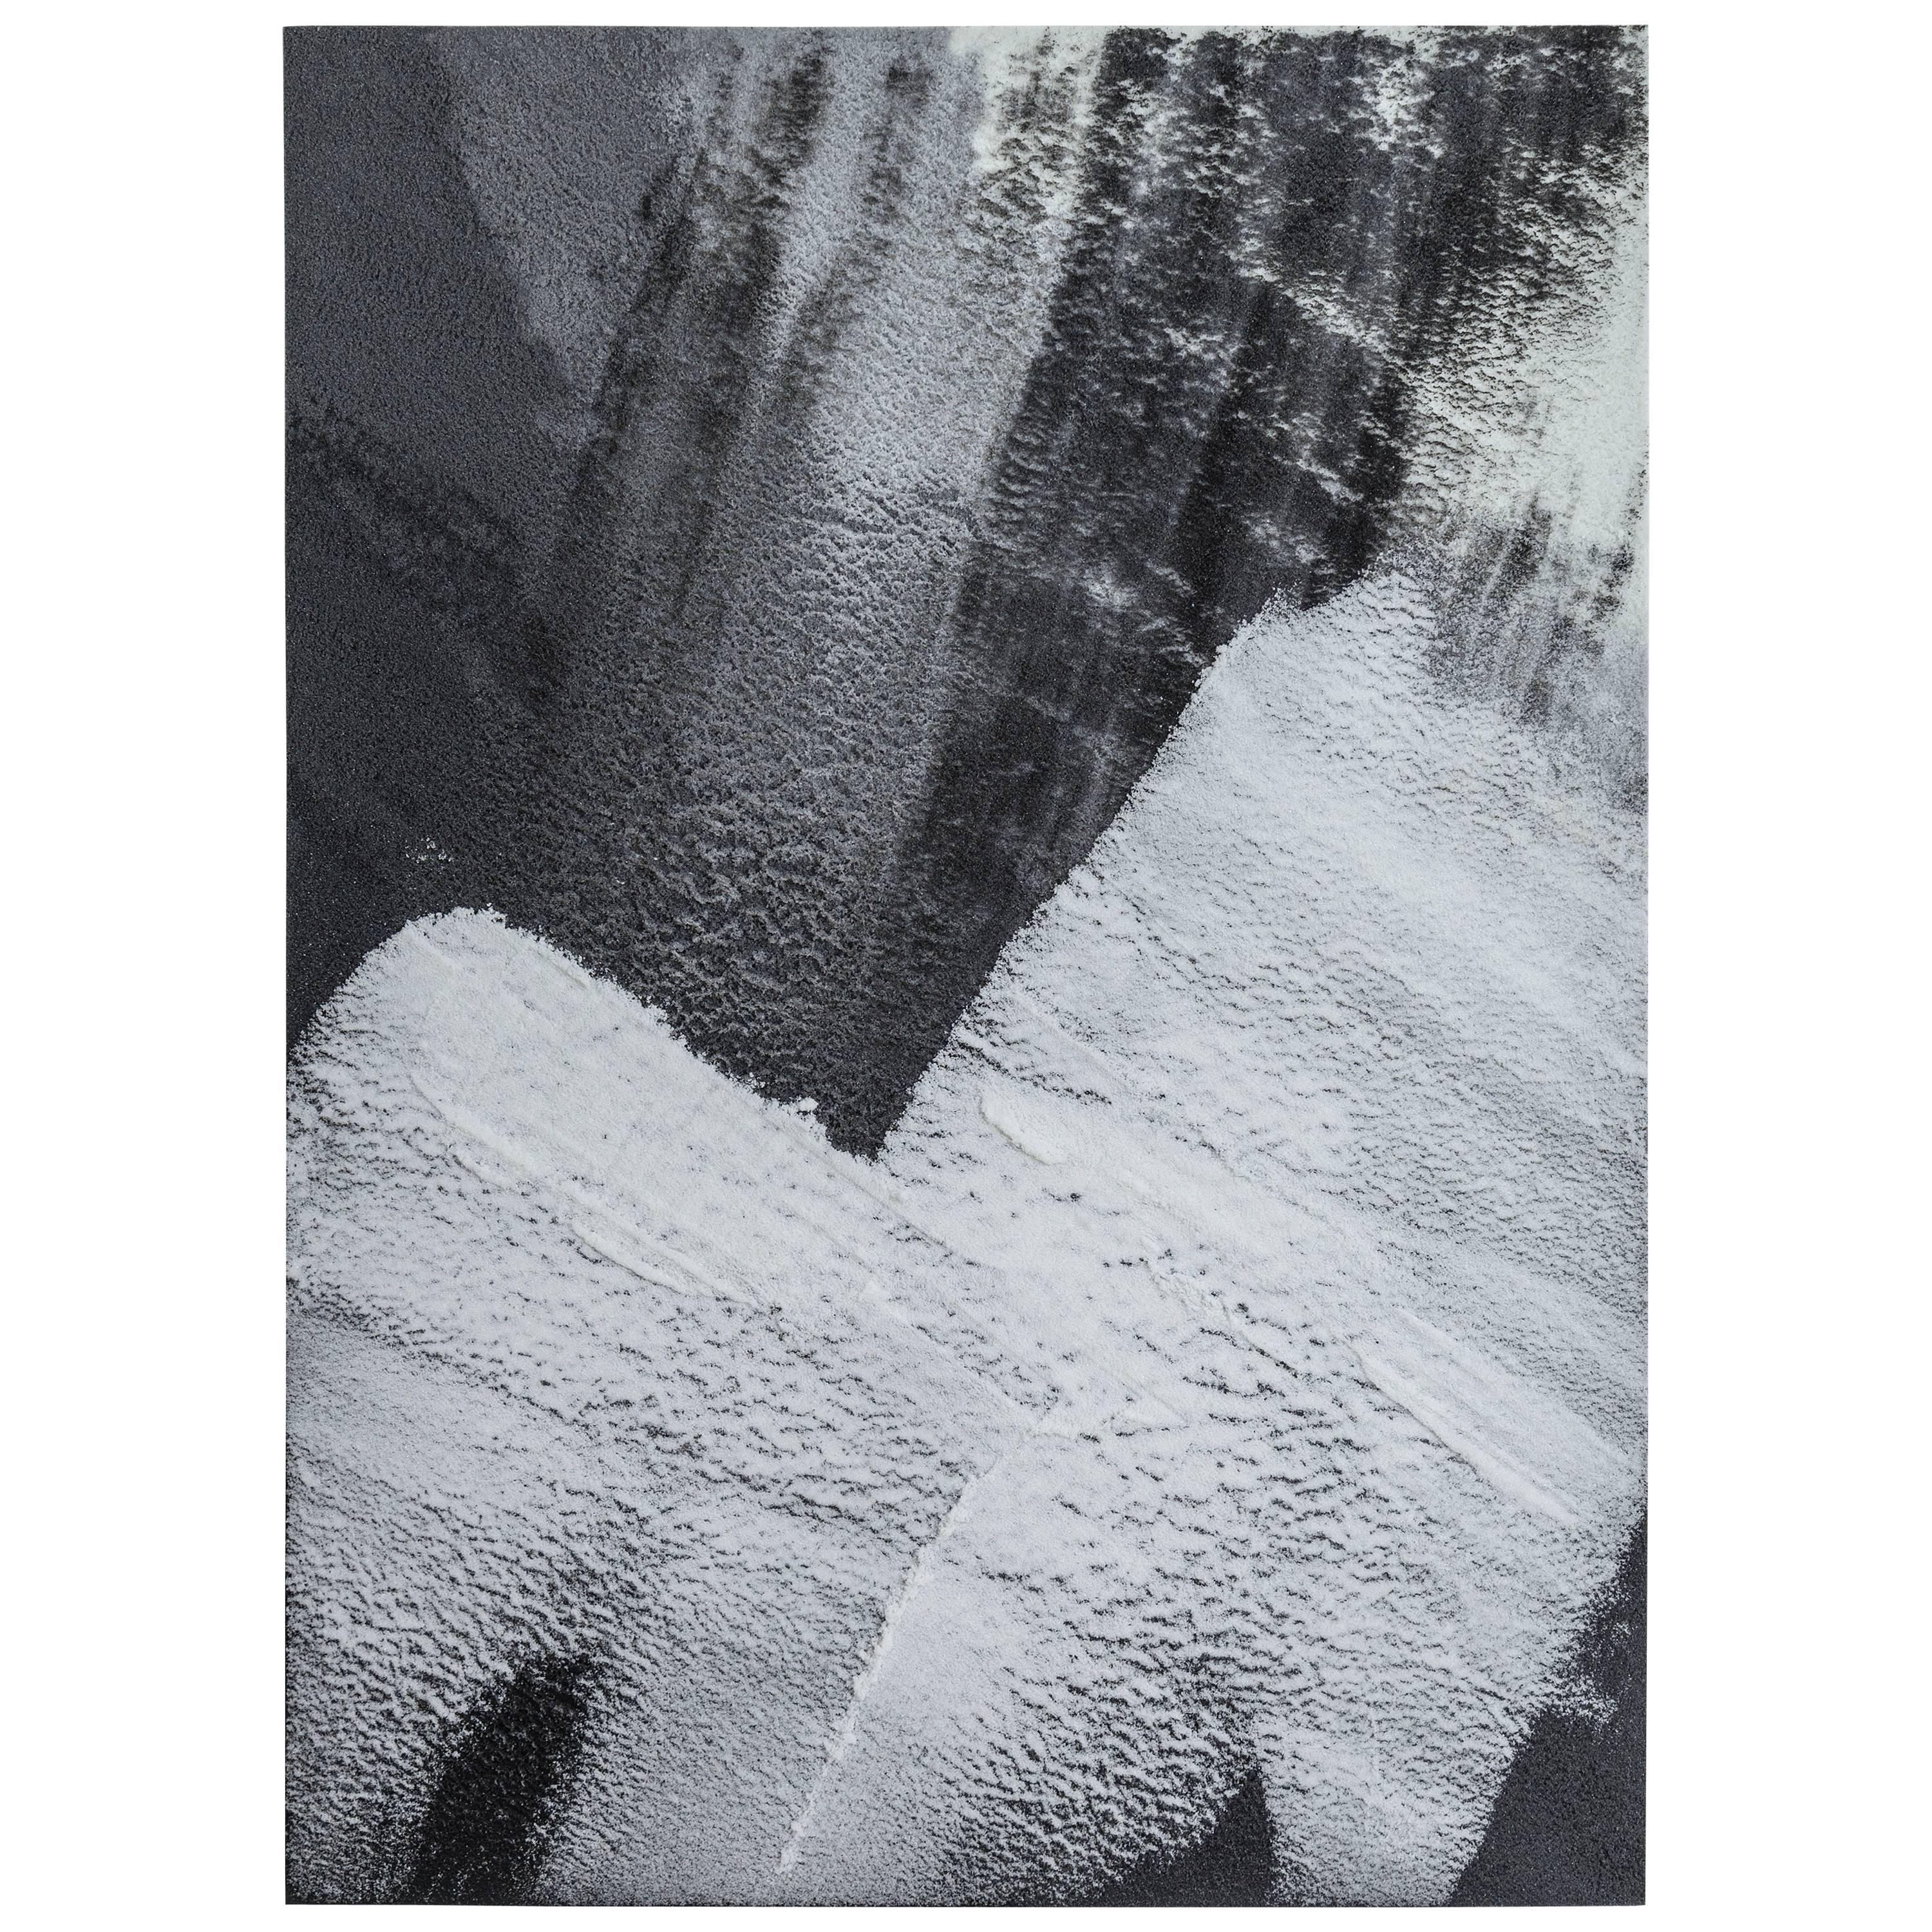 Richter Flatwork, Powdered Glass by Fernando Mastrangelo